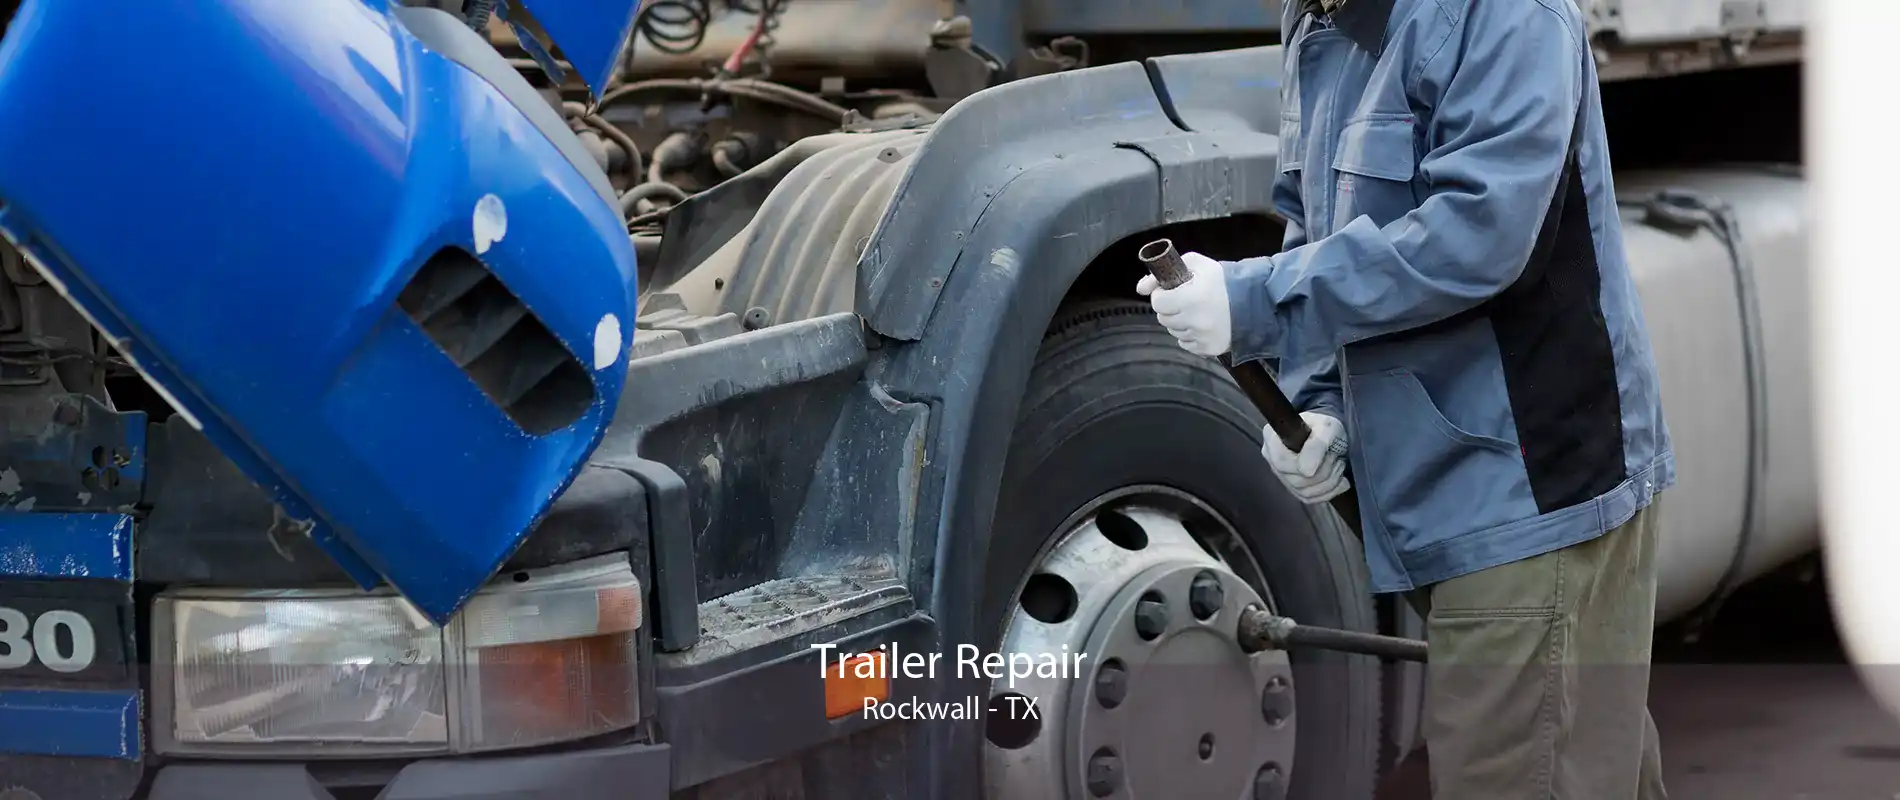 Trailer Repair Rockwall - TX